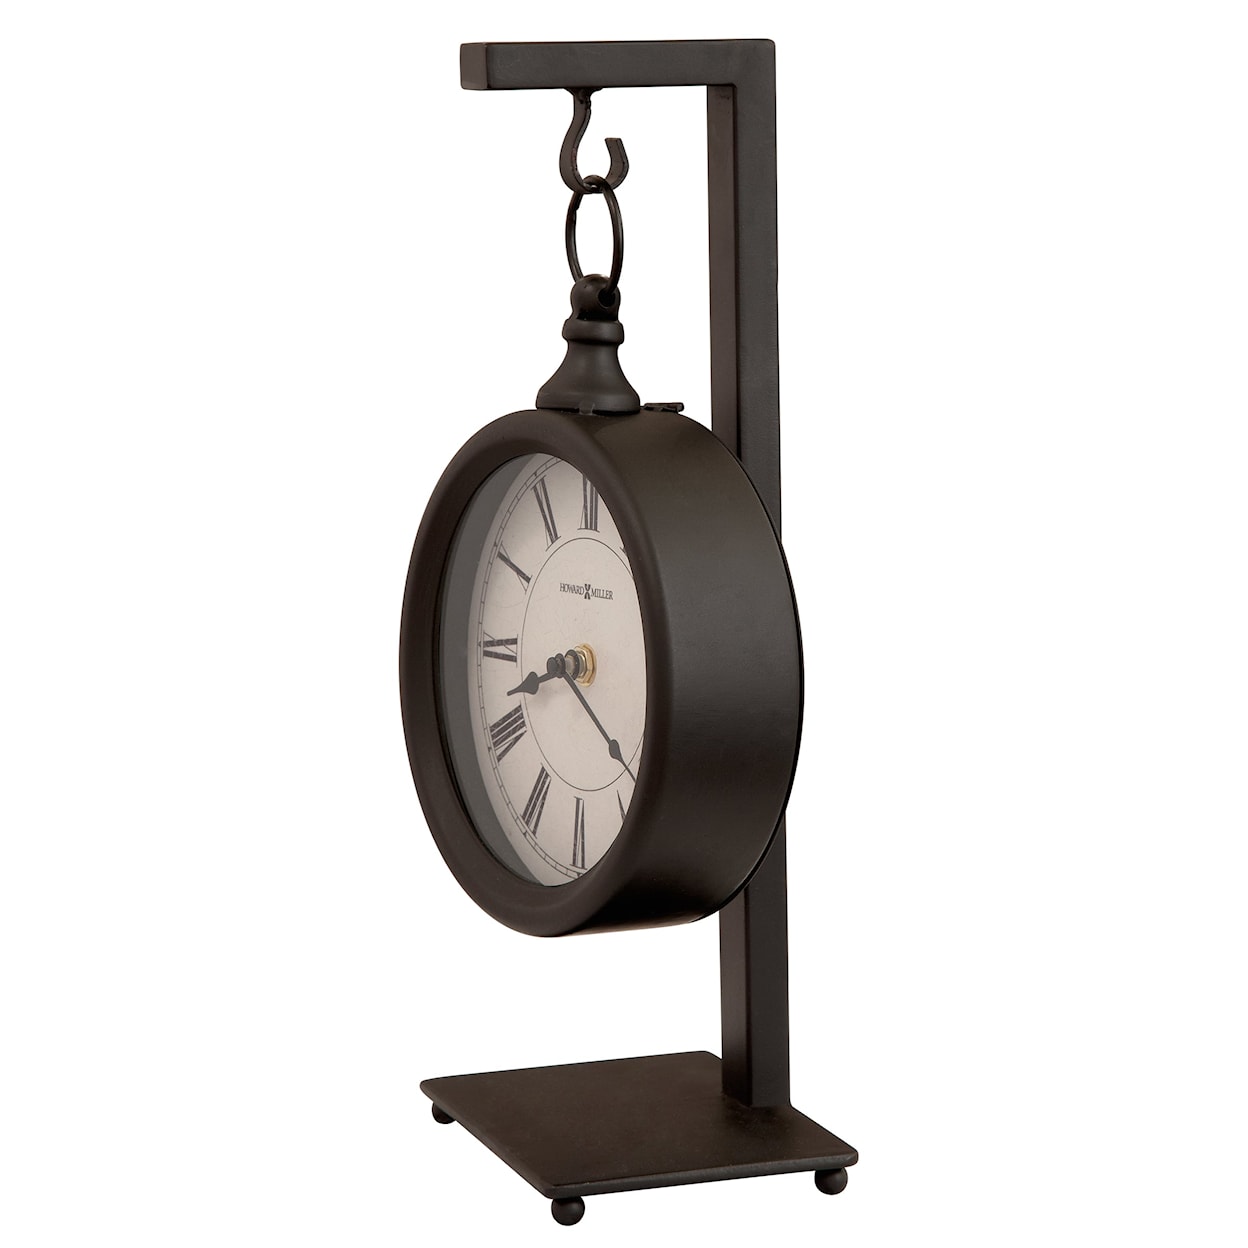 Howard Miller Howard Miller Loman Mantel Clock